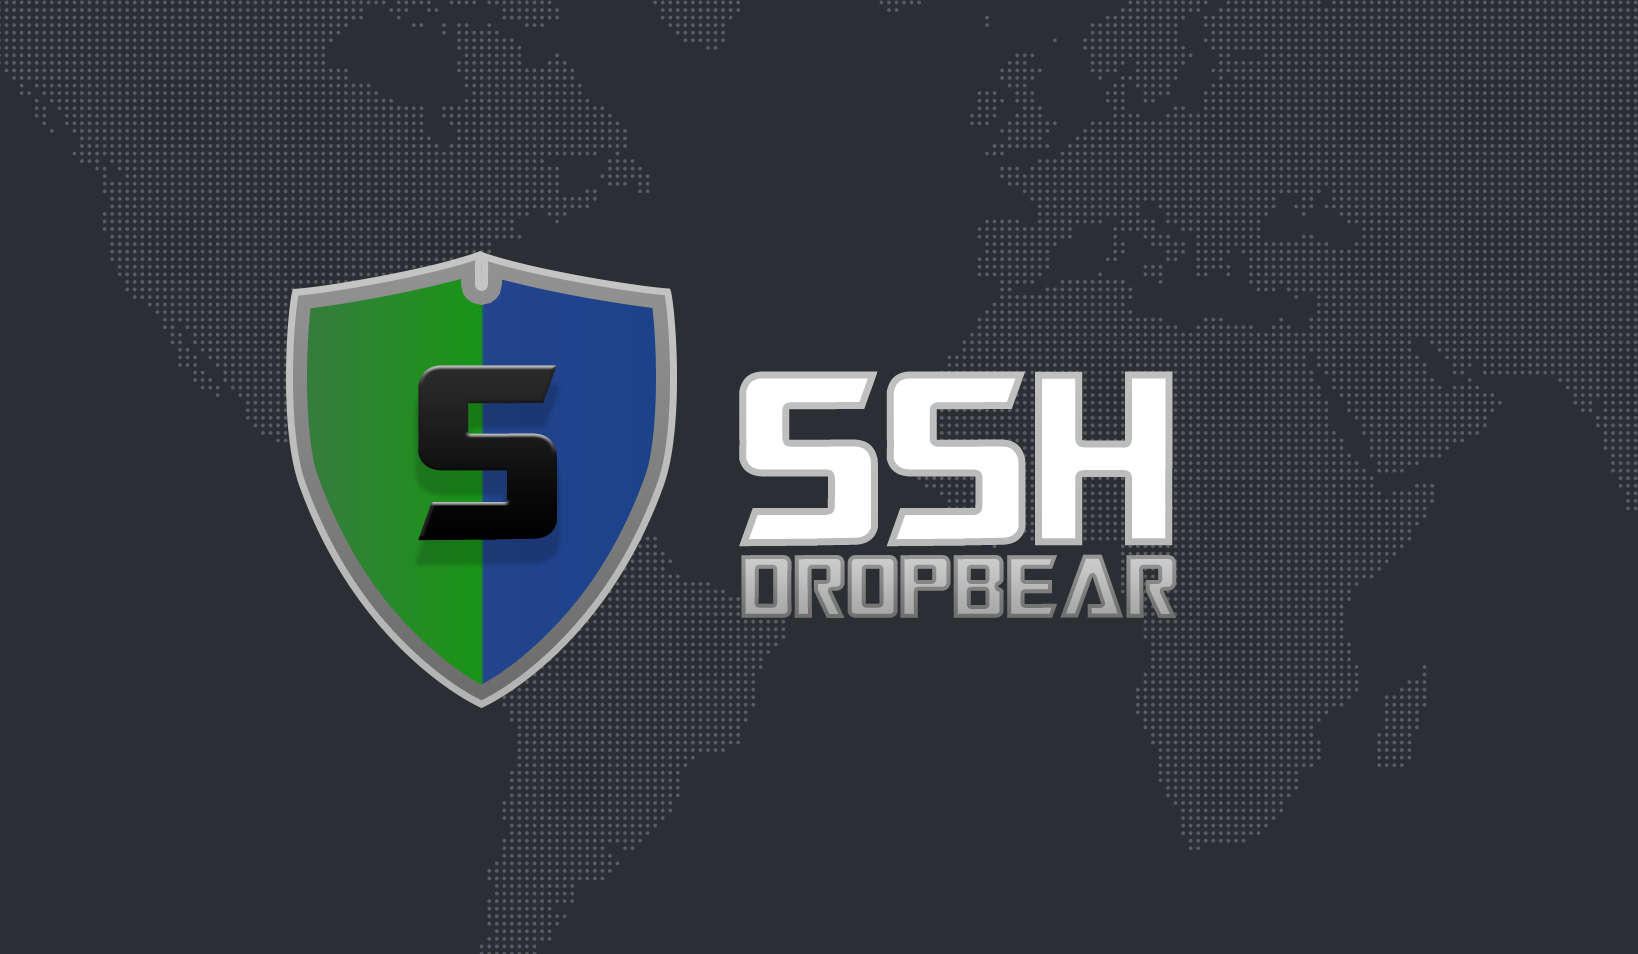 dropbear ssh vulnerability